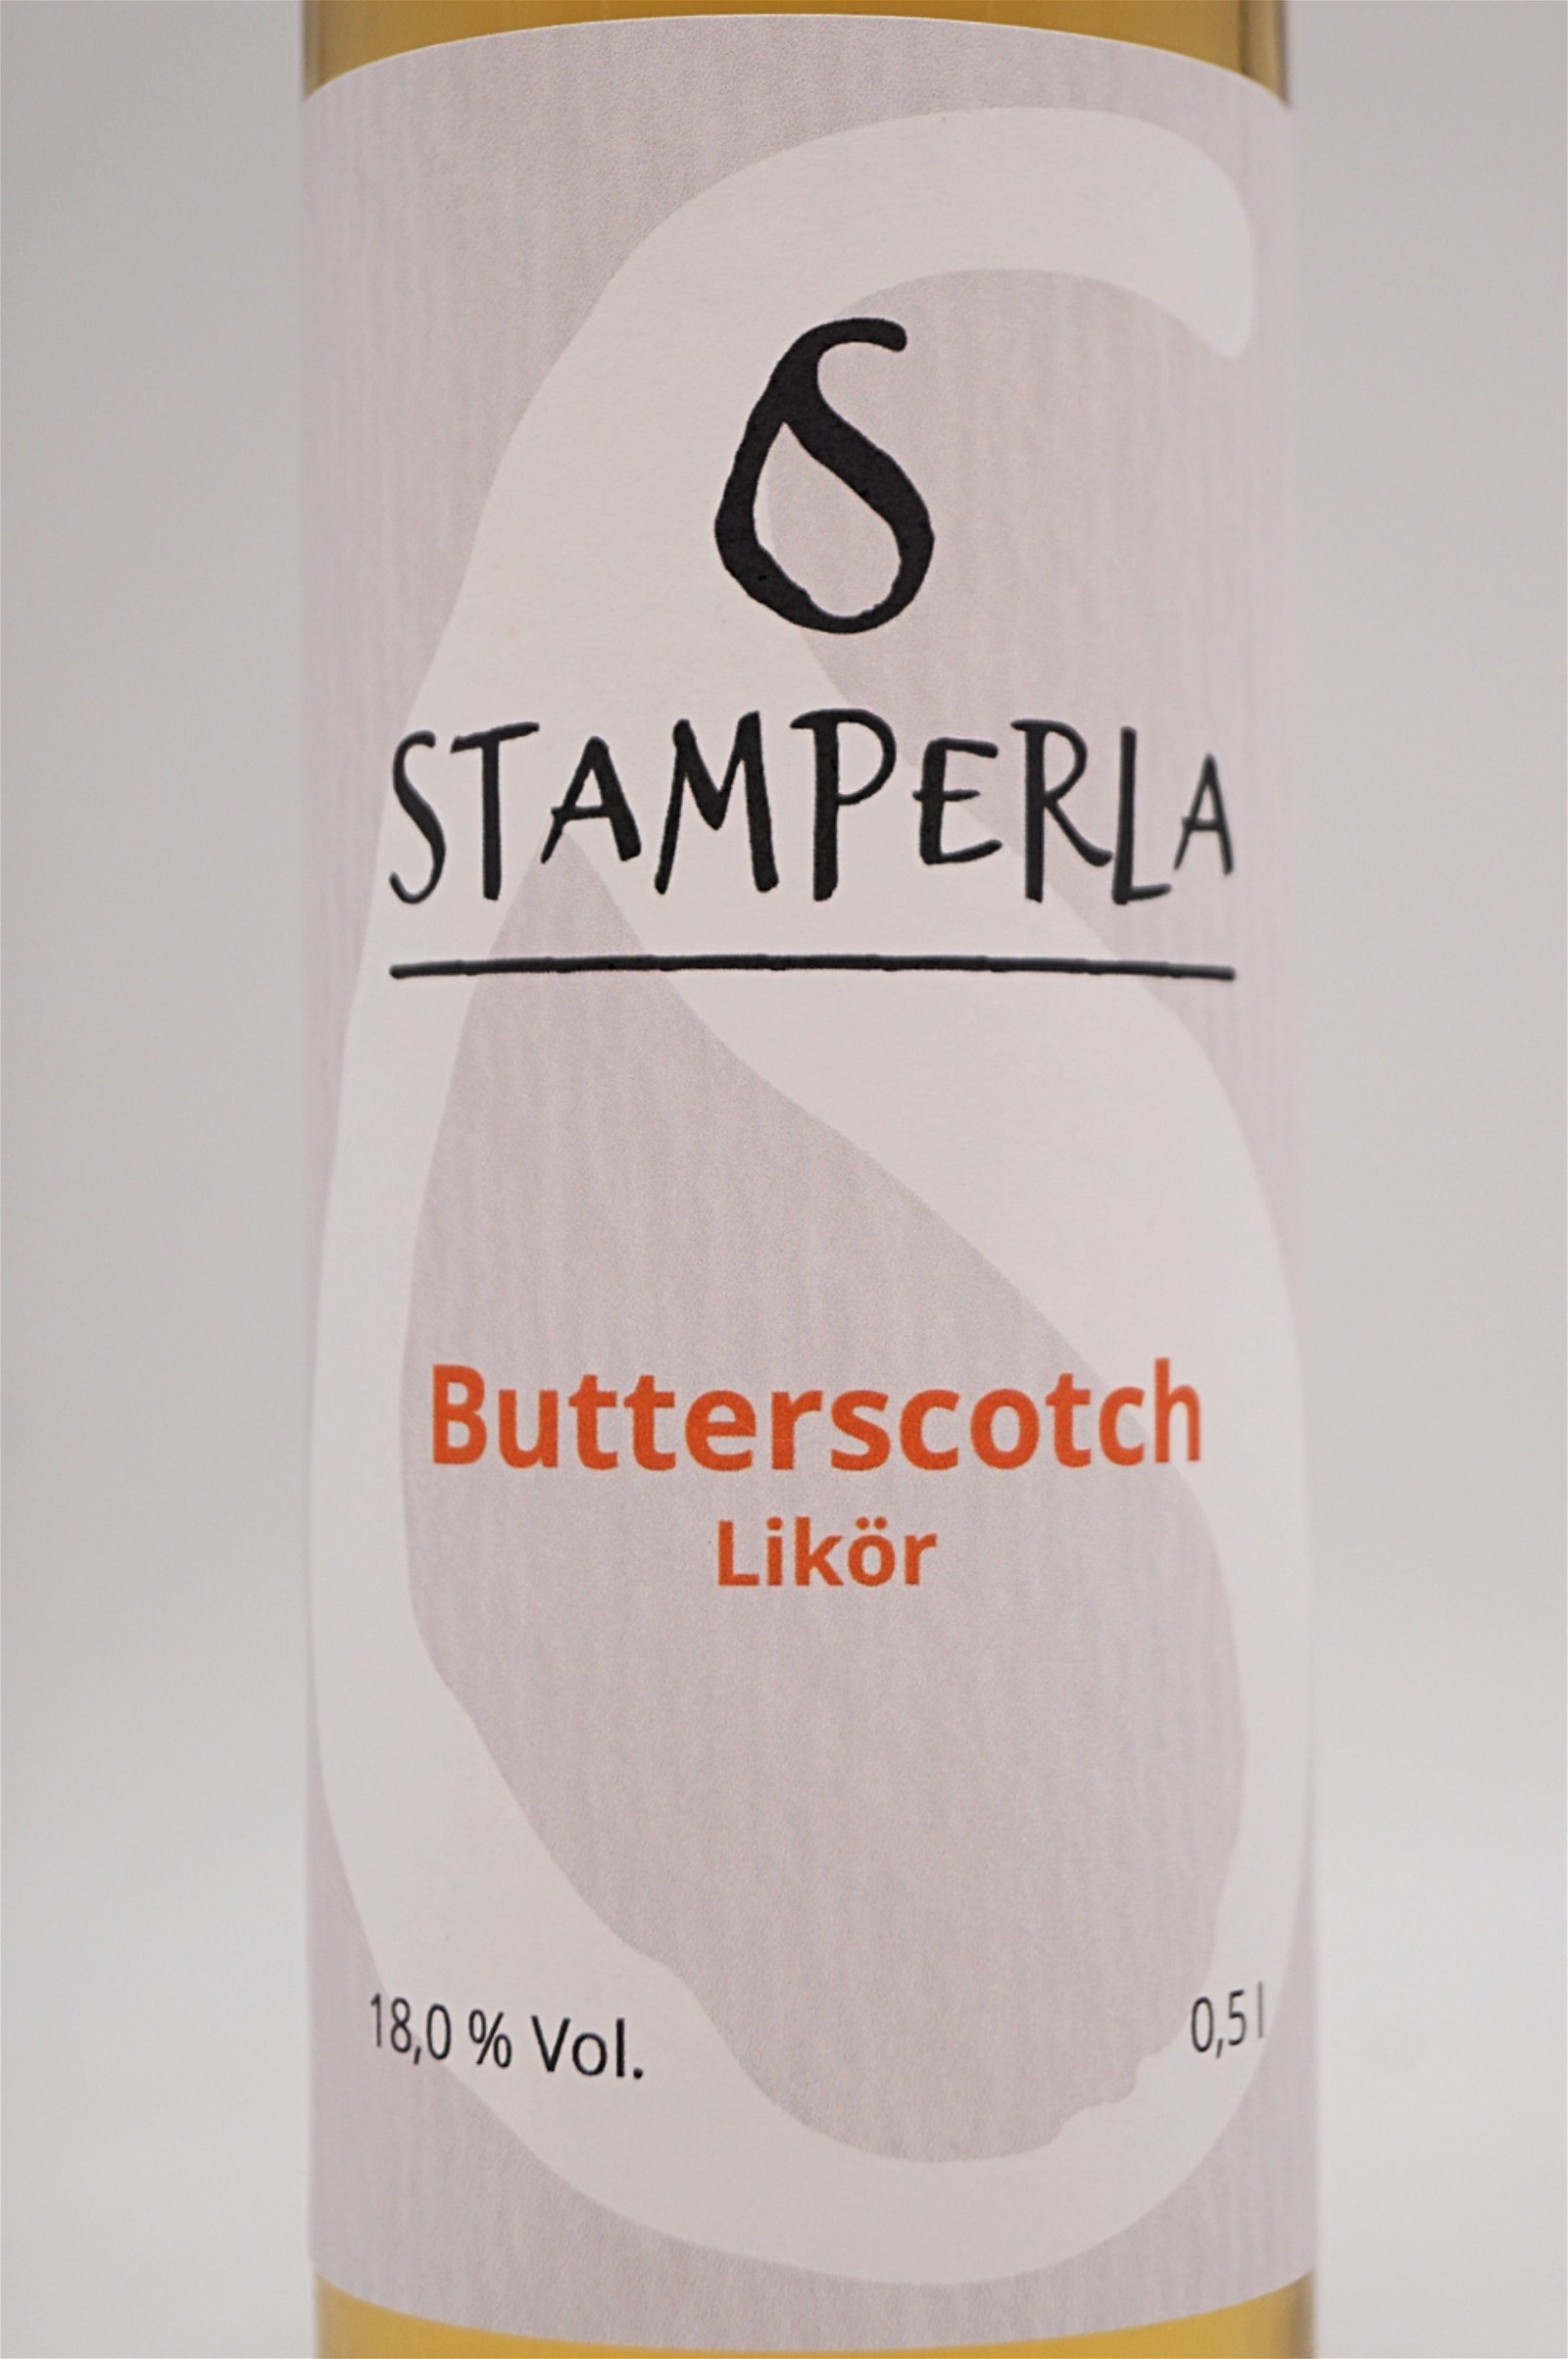 Stamperla Butterscotch Likör